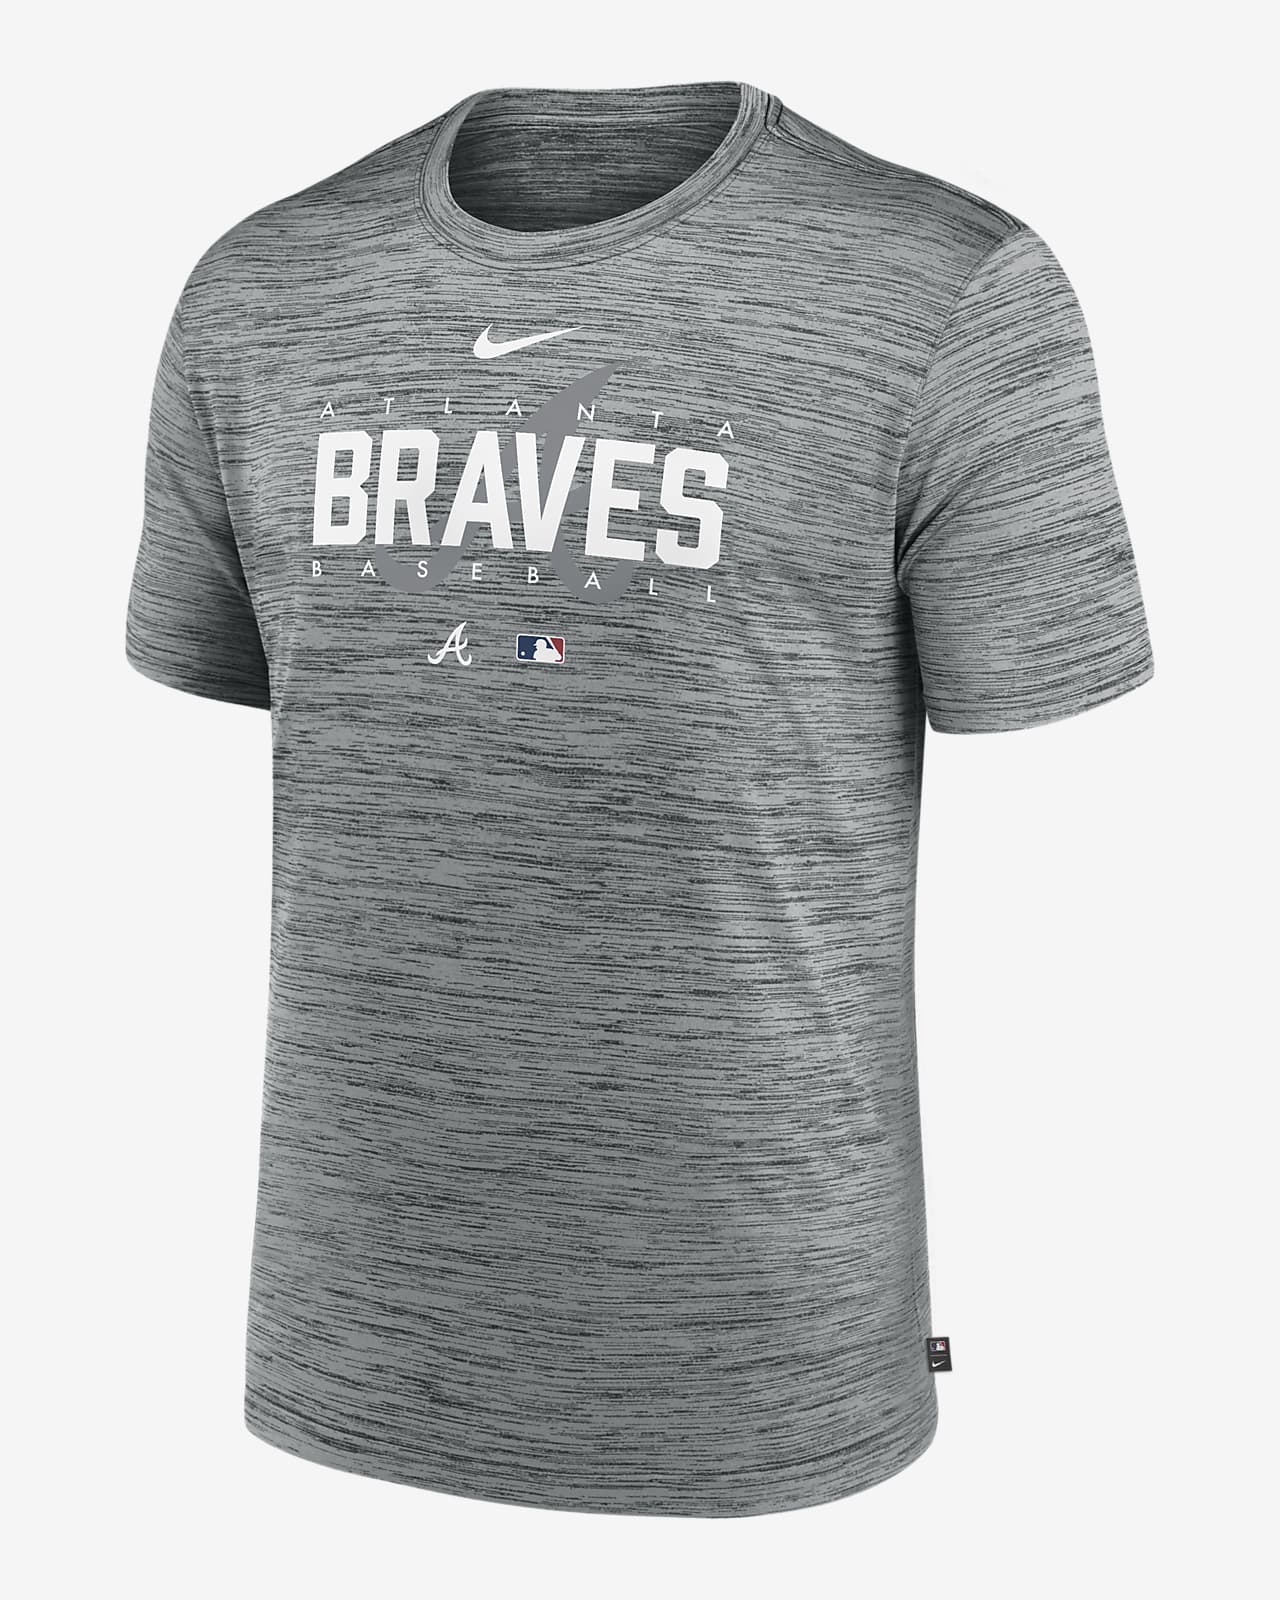 Nike, Shirts & Tops, Braves Jersey Youth Medium